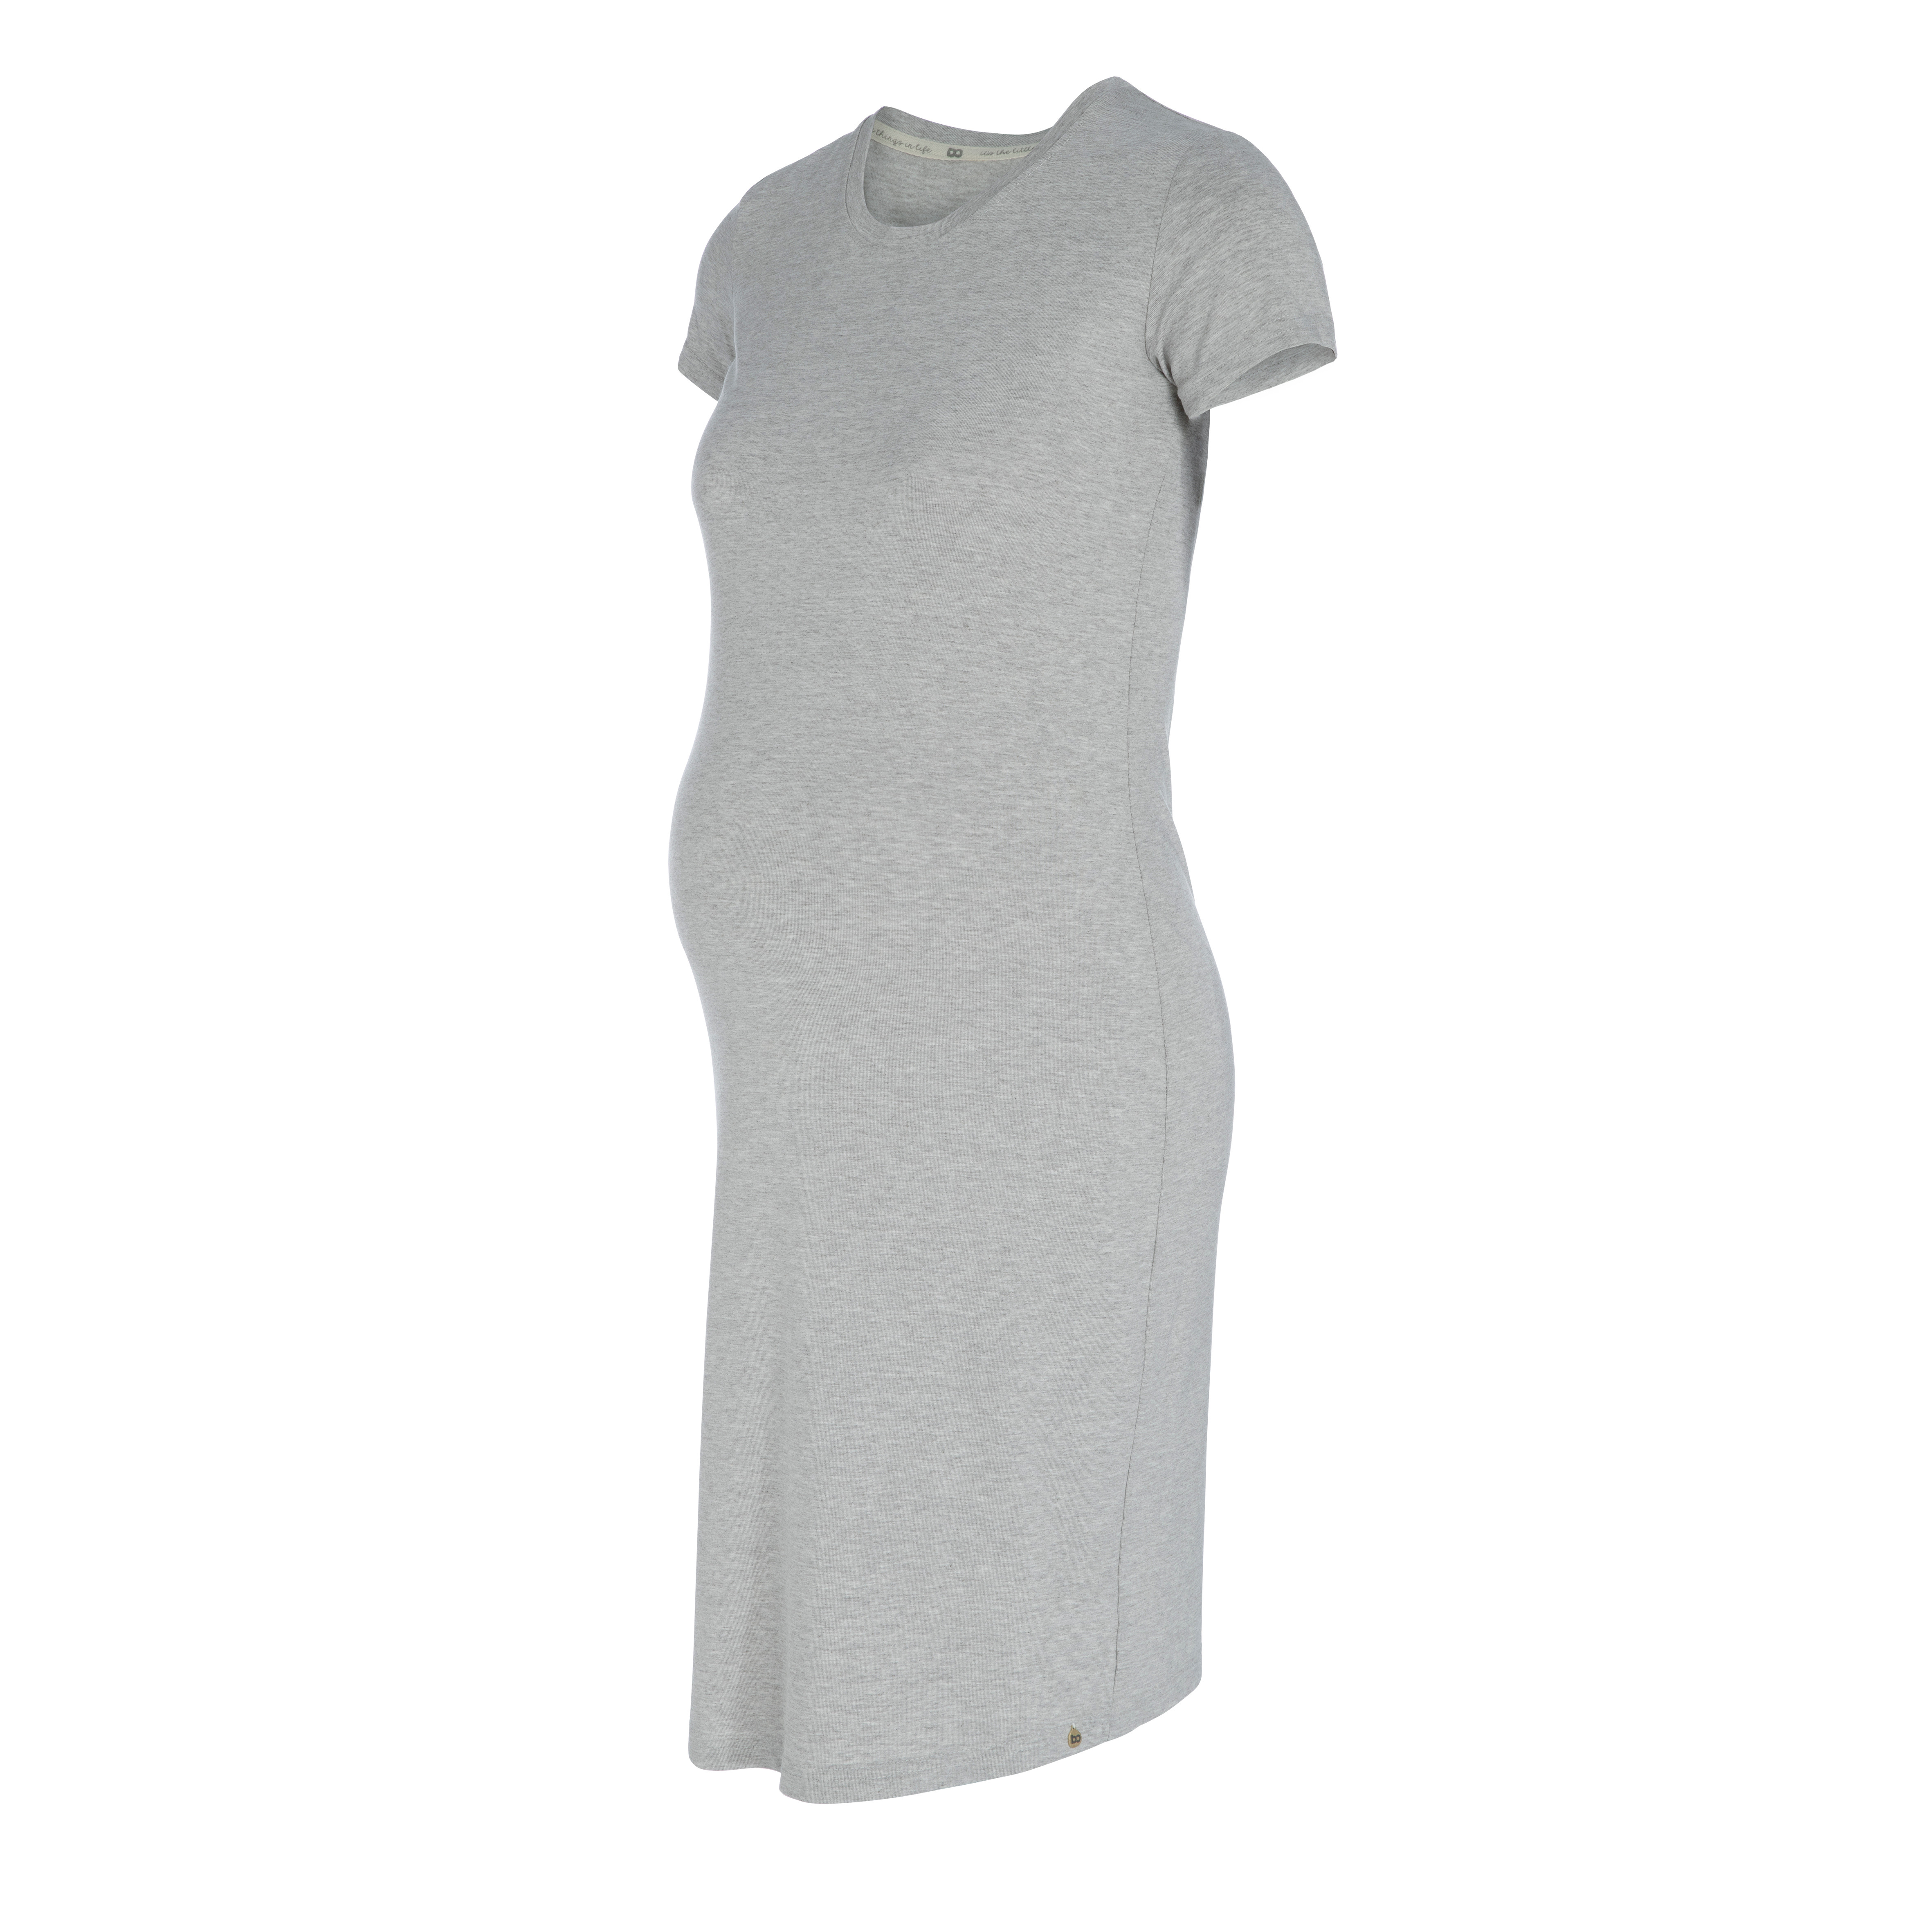 Robe de maternité Glow dusty grey - XL